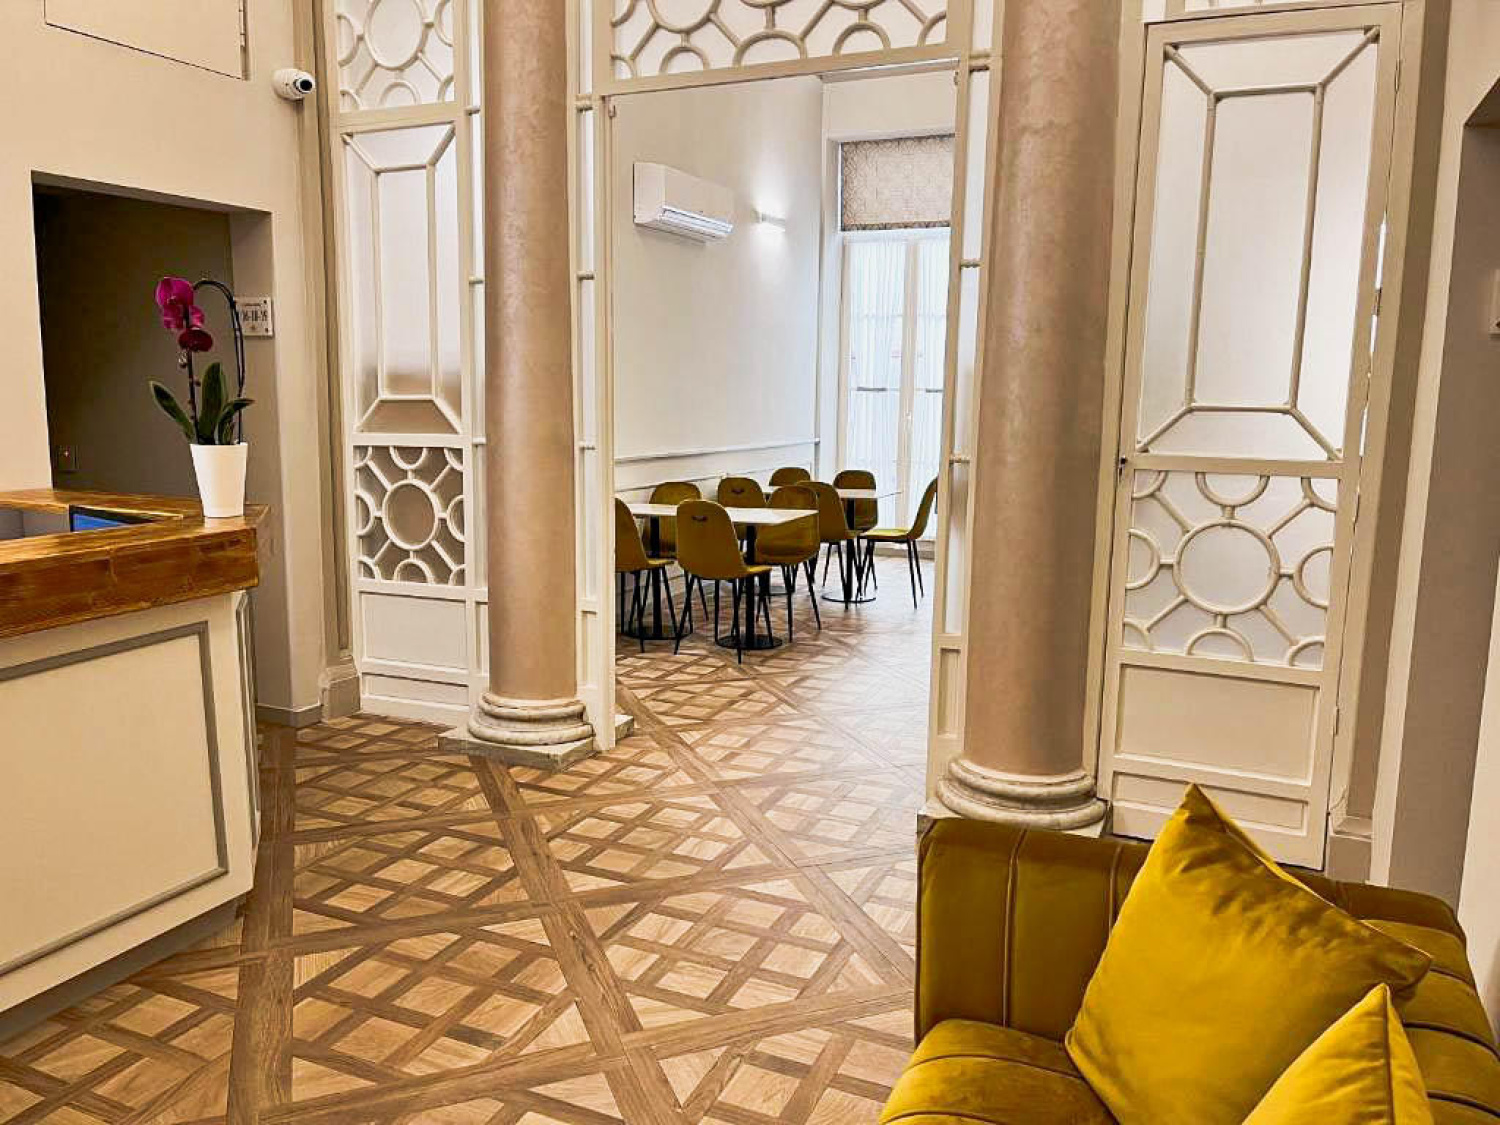 CORTE DEI SOGNI BOUTIQUE HOTEL EN FLORENCIA - IBFOR - Your design shop